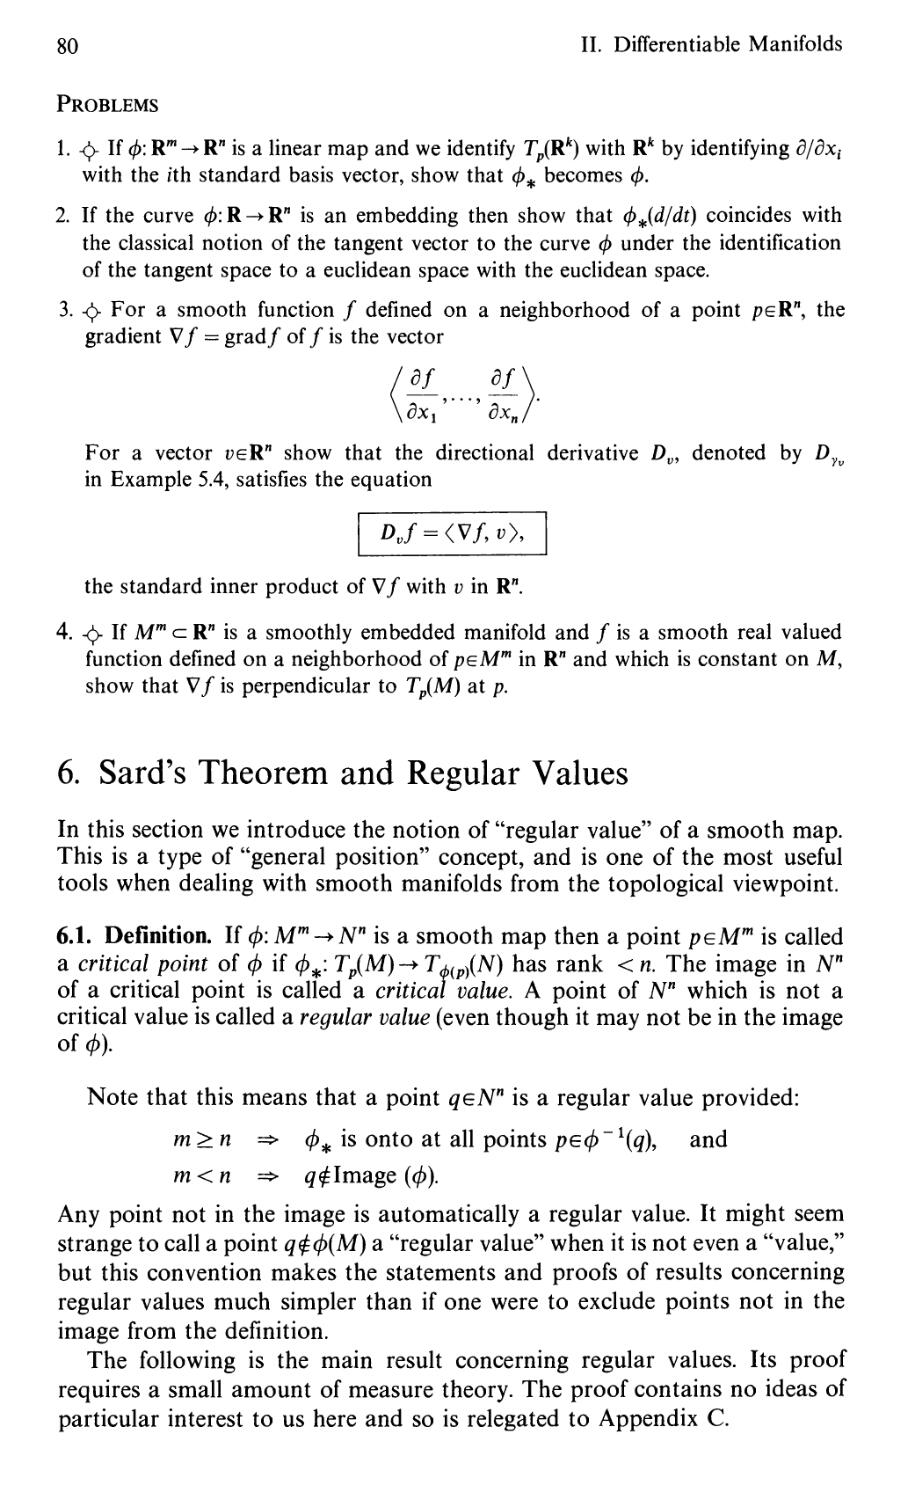 6. Sard's Theorem and Regular Values